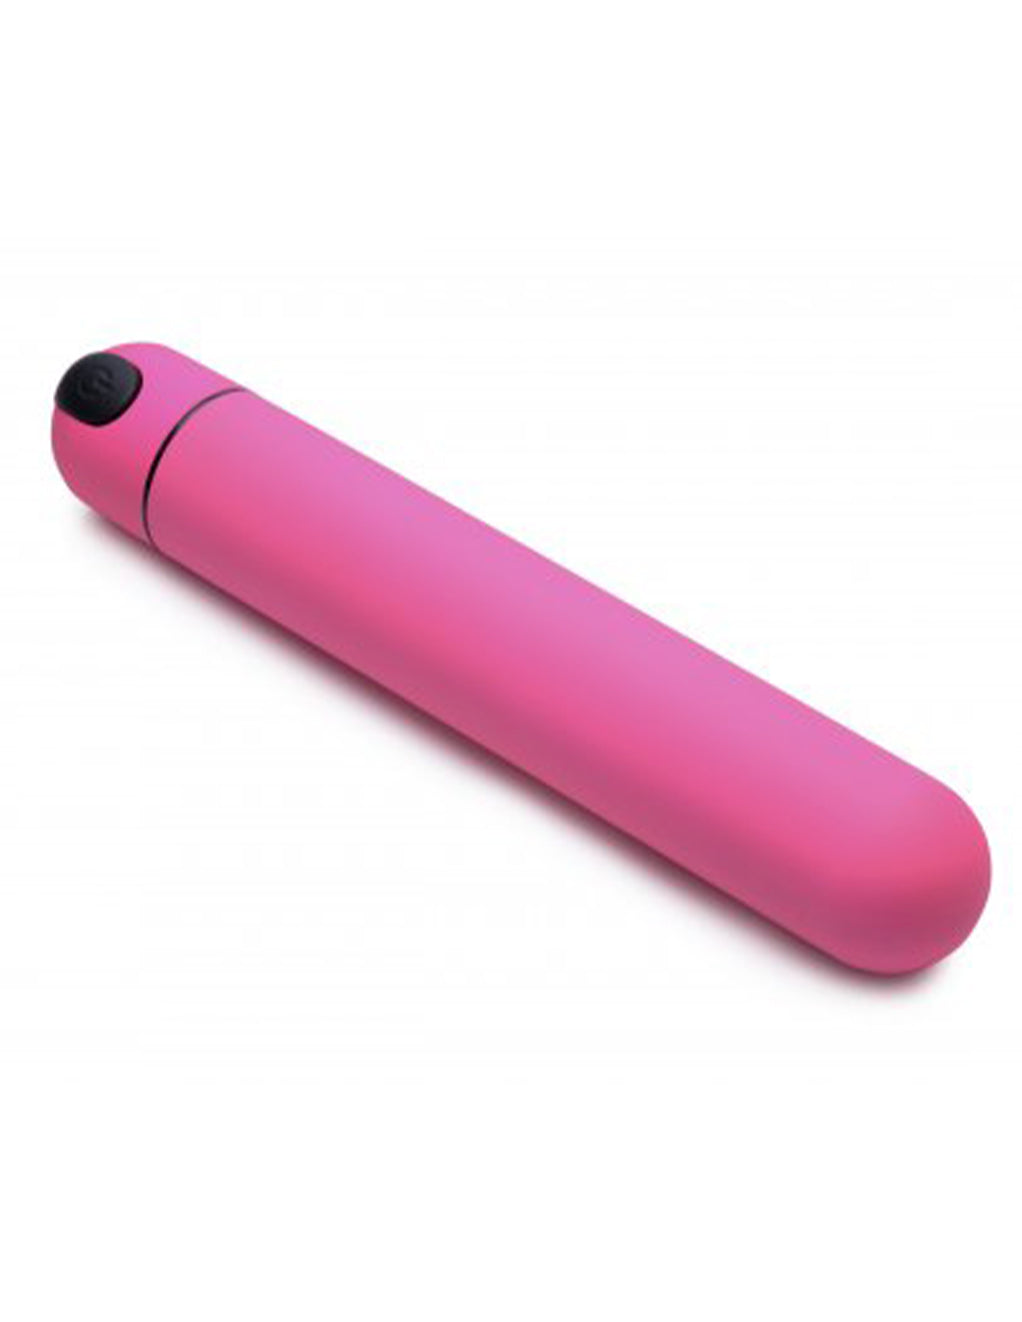 Bang! XL Bullet Vibrator- Pink- Side Angle